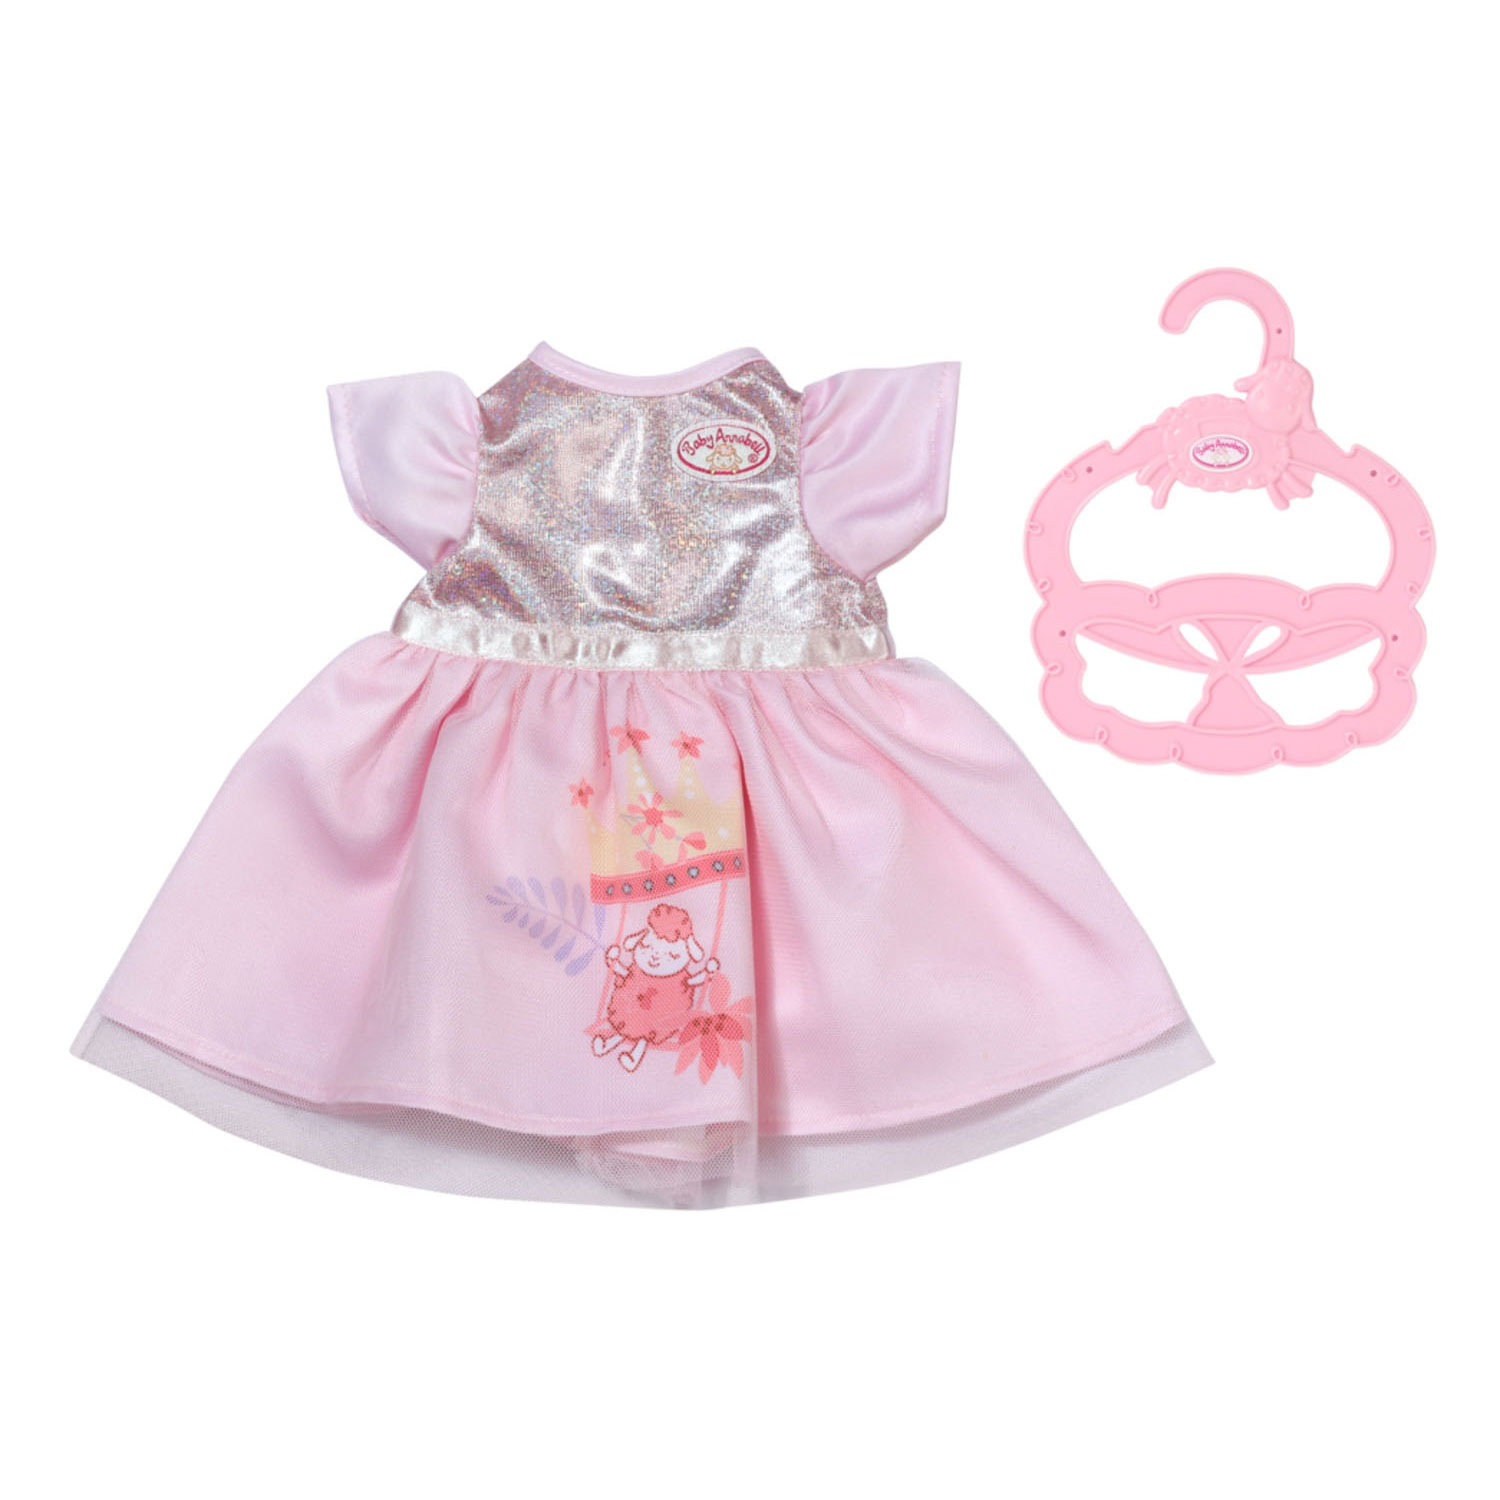 Baby Annabell Petite Robe Douce, 36 cm